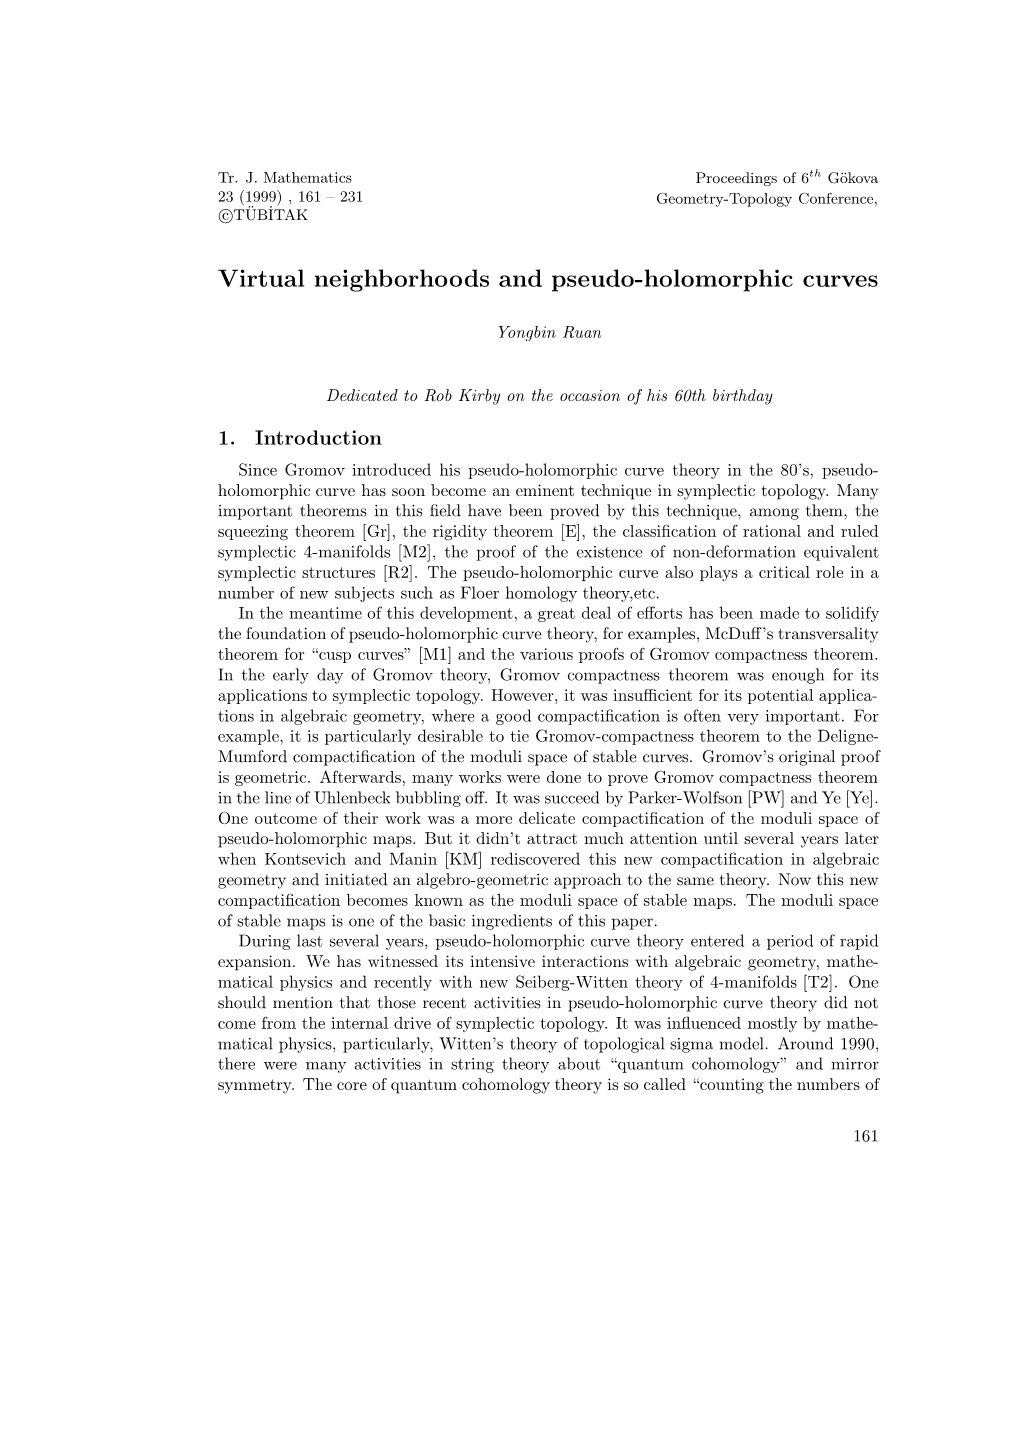 Virtual Neighborhoods and Pseudo-Holomorphic Curves